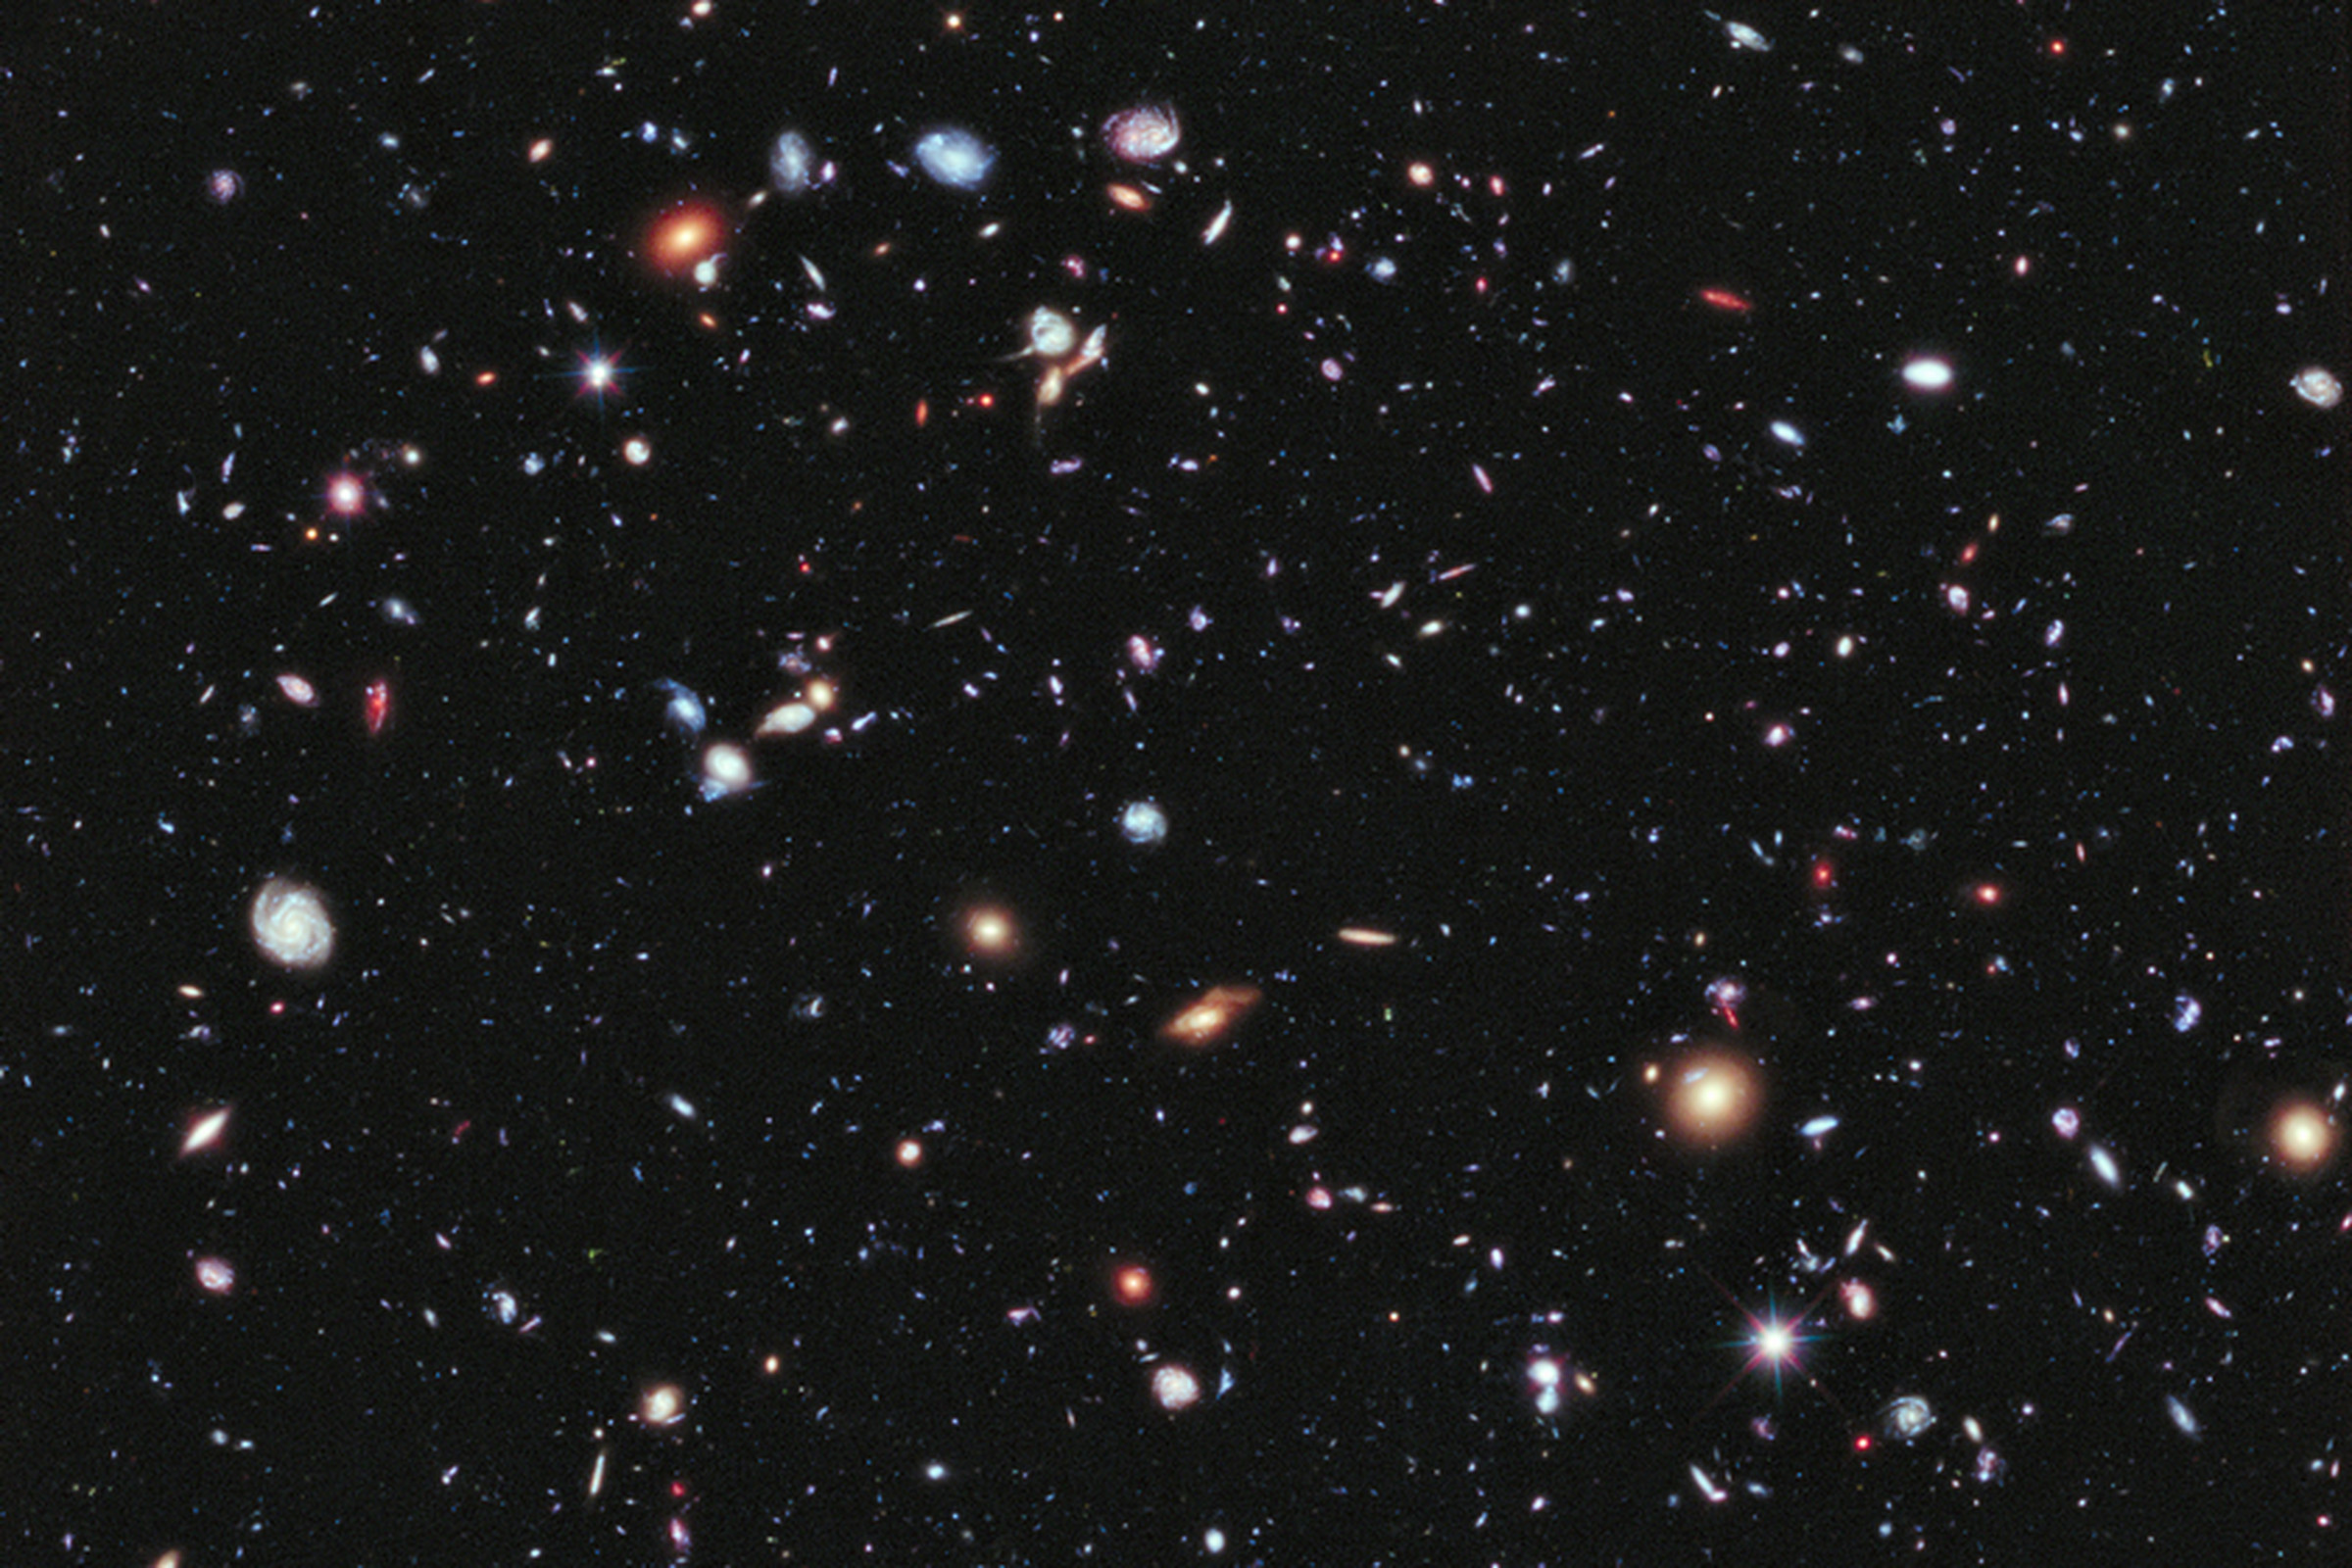 Hubble eXtreme Deep Field (HXDF)